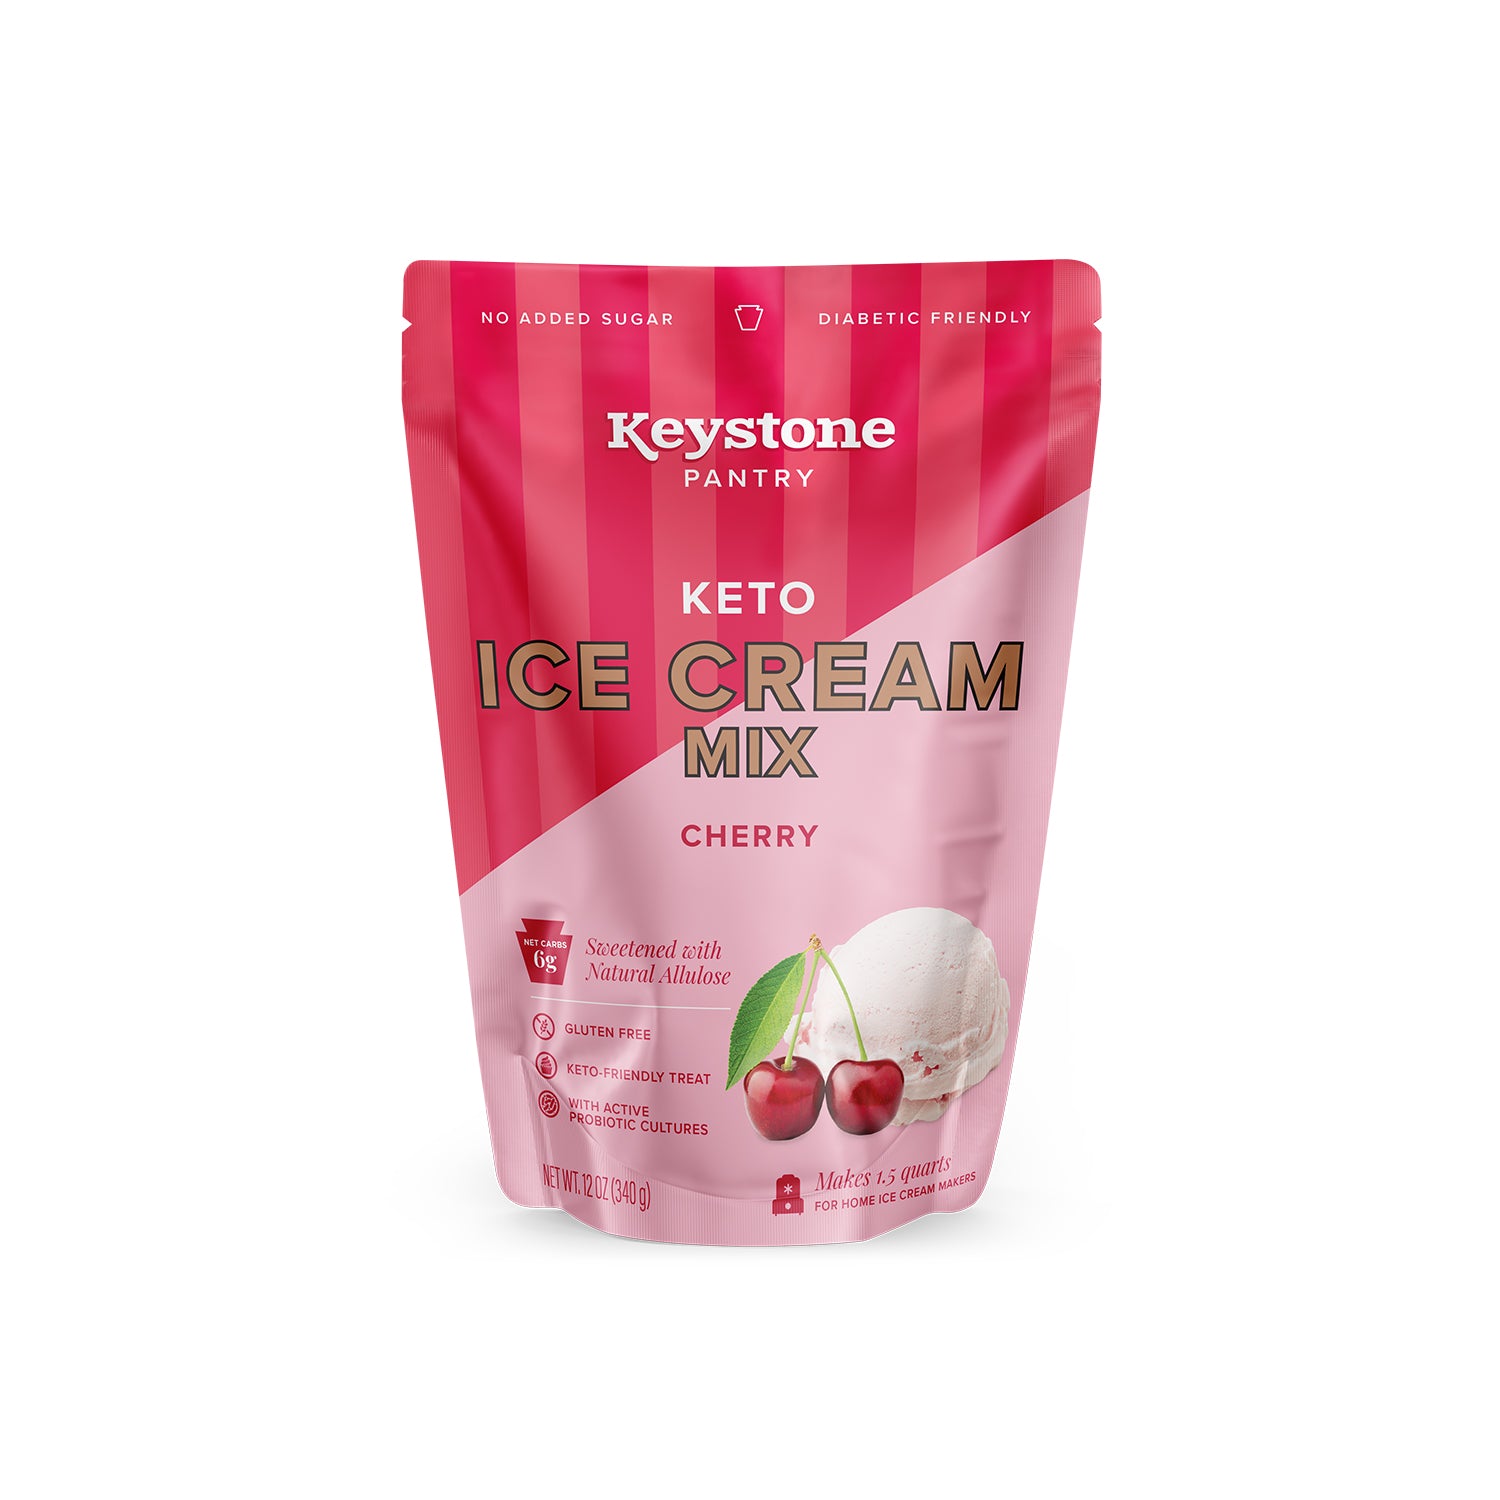 Keystone Pantry Keto Ice Cream Mix Cherry with Probiotic Cultures